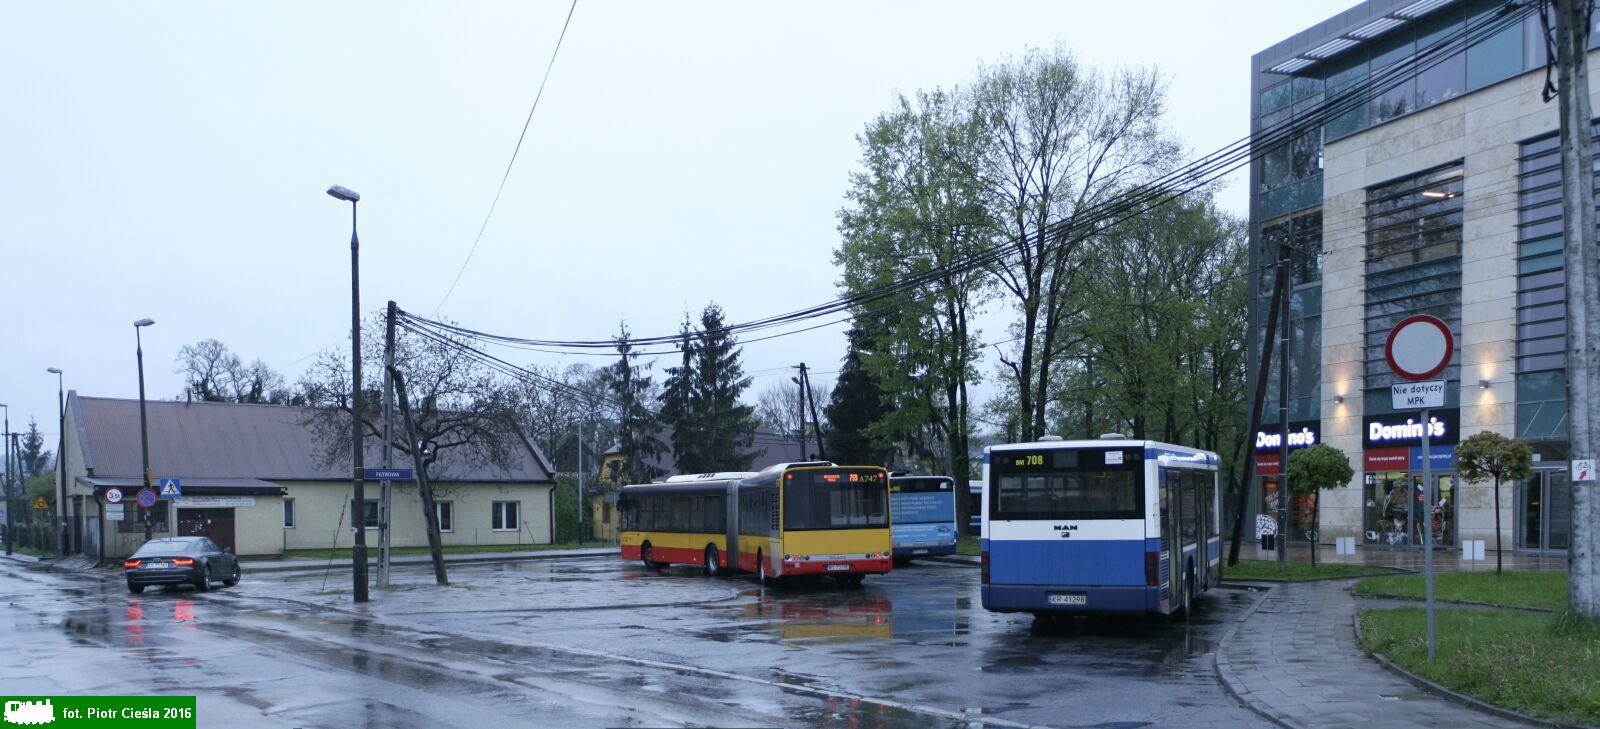 KrakÃ³w - "Bronowice MaÅ‚e" - pÄ™tla autobusowa, 2016.04.27